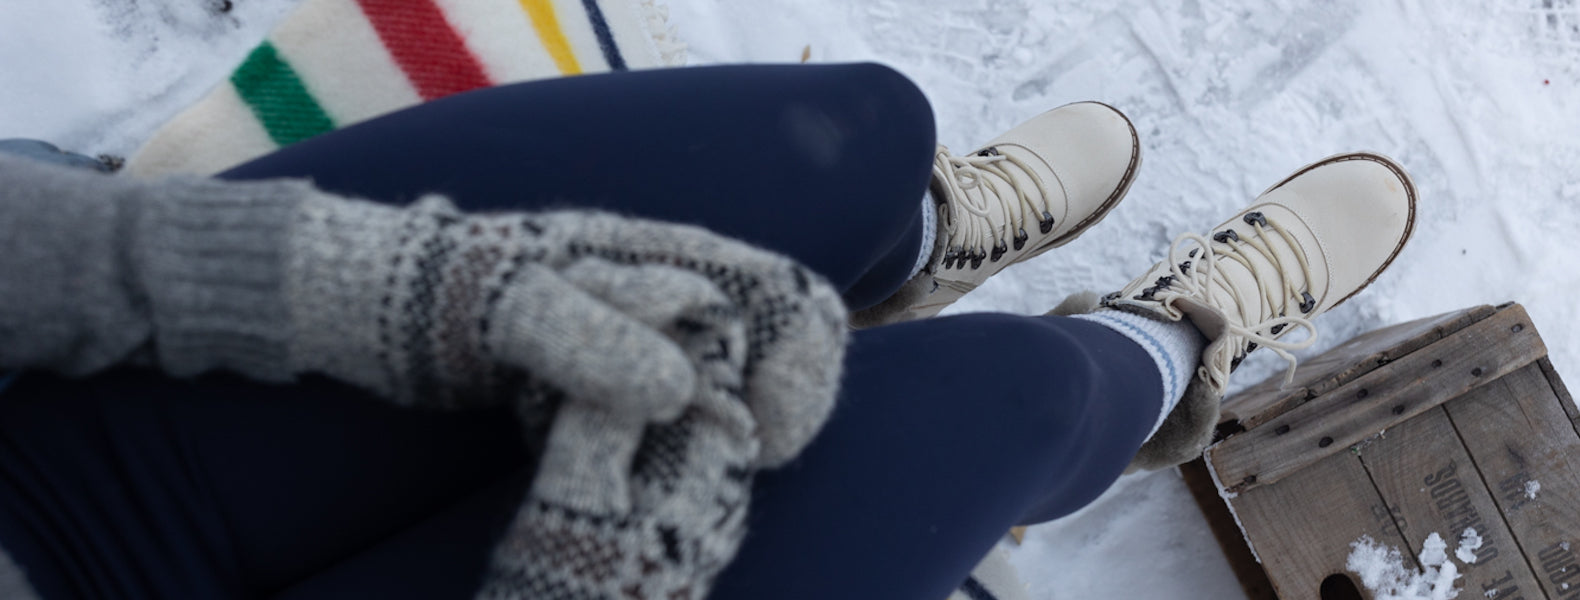 Woman wearing waterproof winter boots in the snow